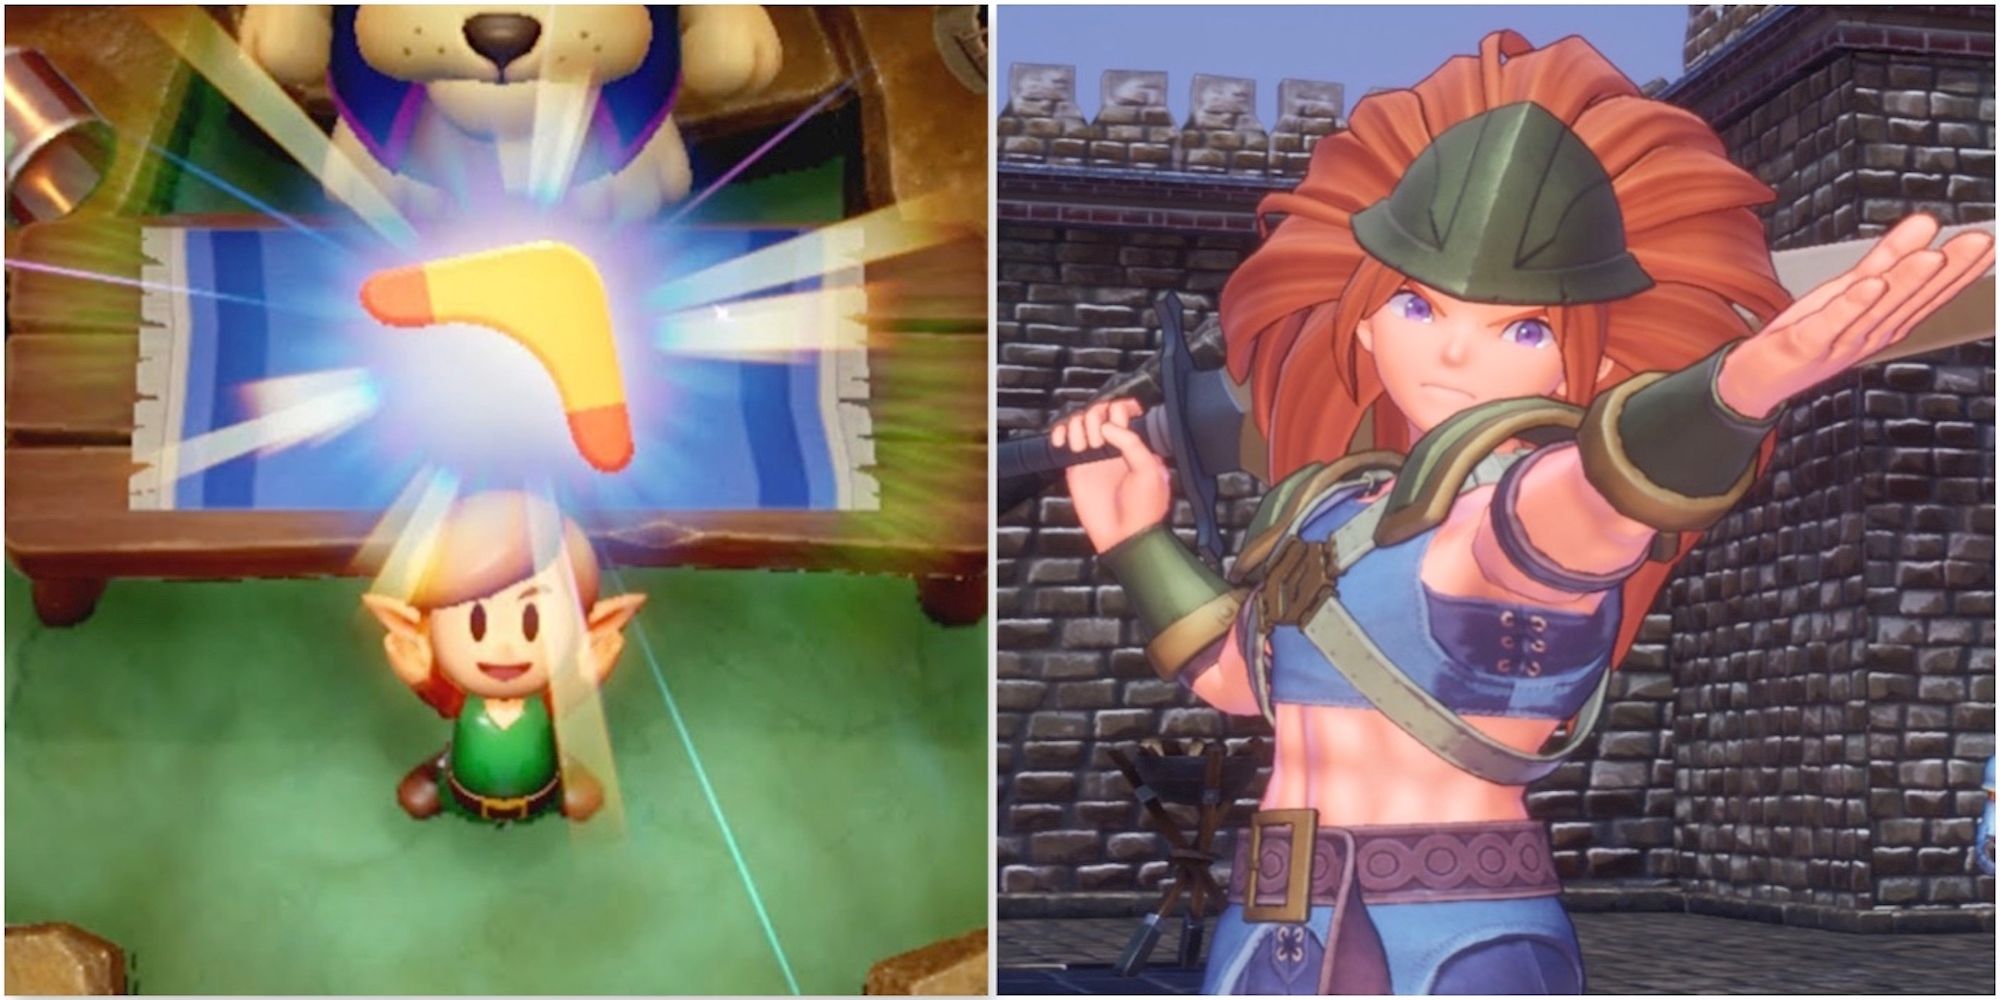 Getting the Boomerang in The Legend of Zelda Link's Awakening and Duran in Trials of Mana